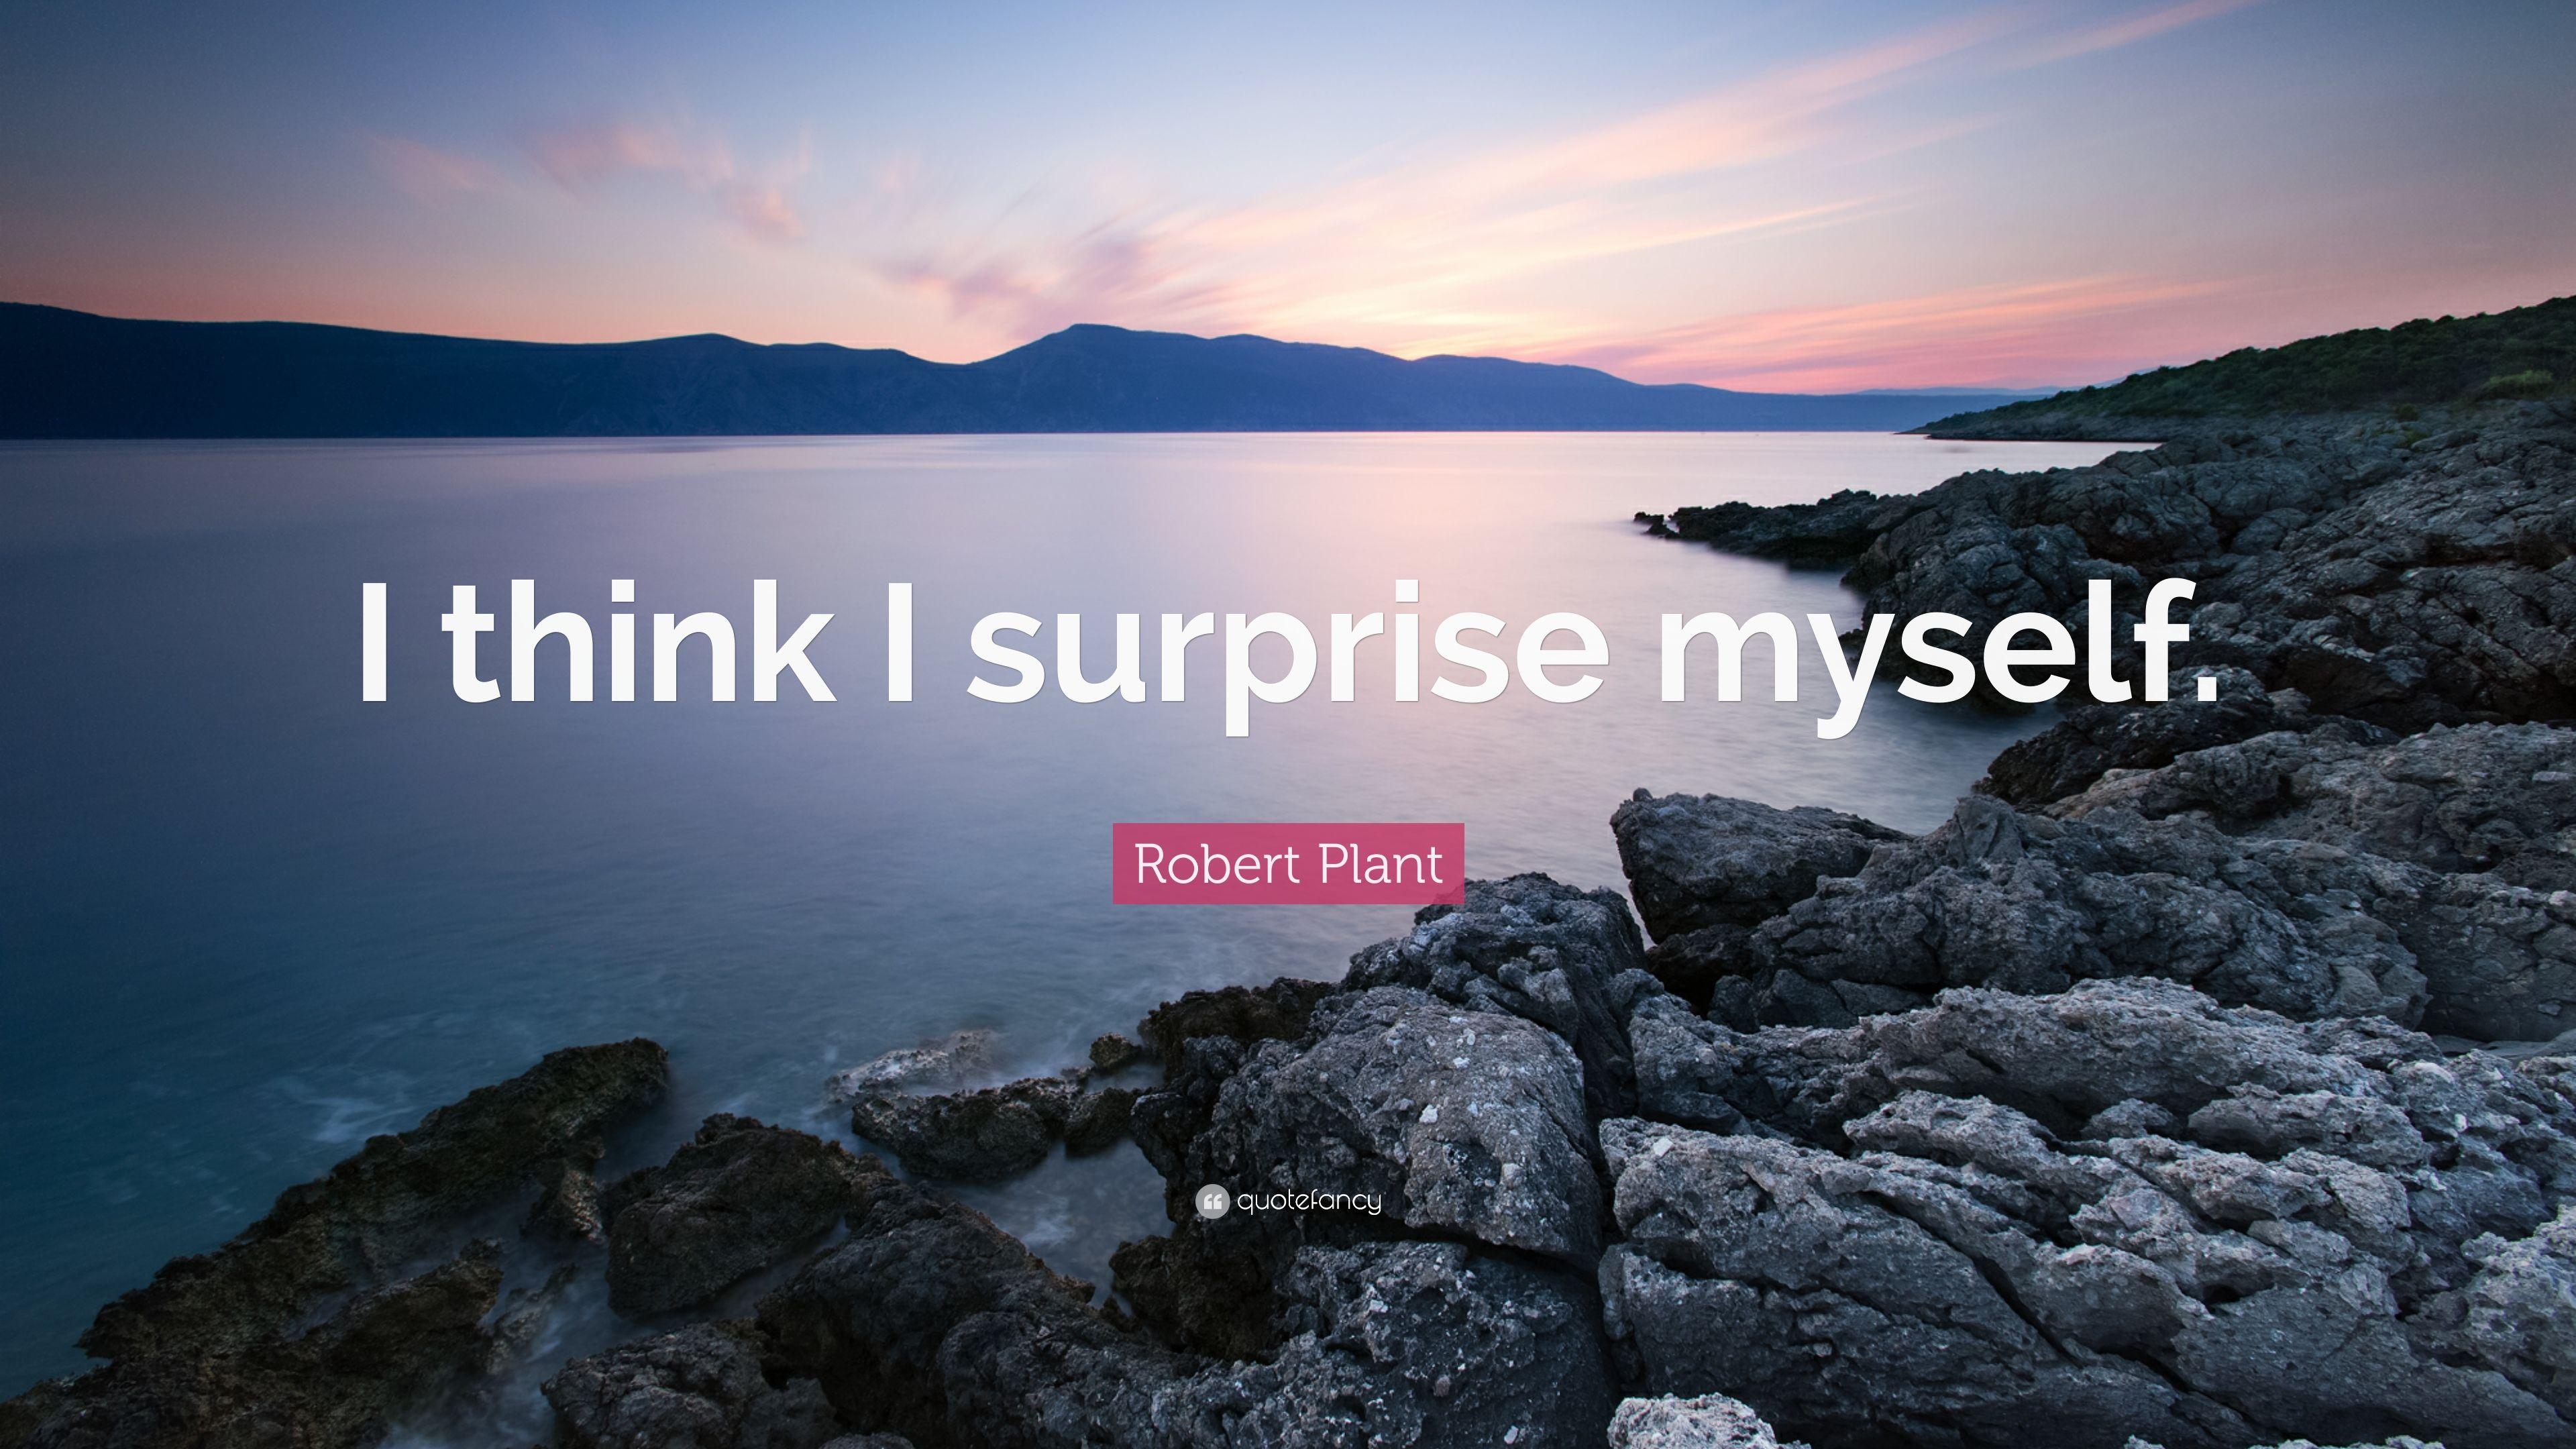 Robert Plant Quote: “I think I surprise myself.” 5 wallpaper